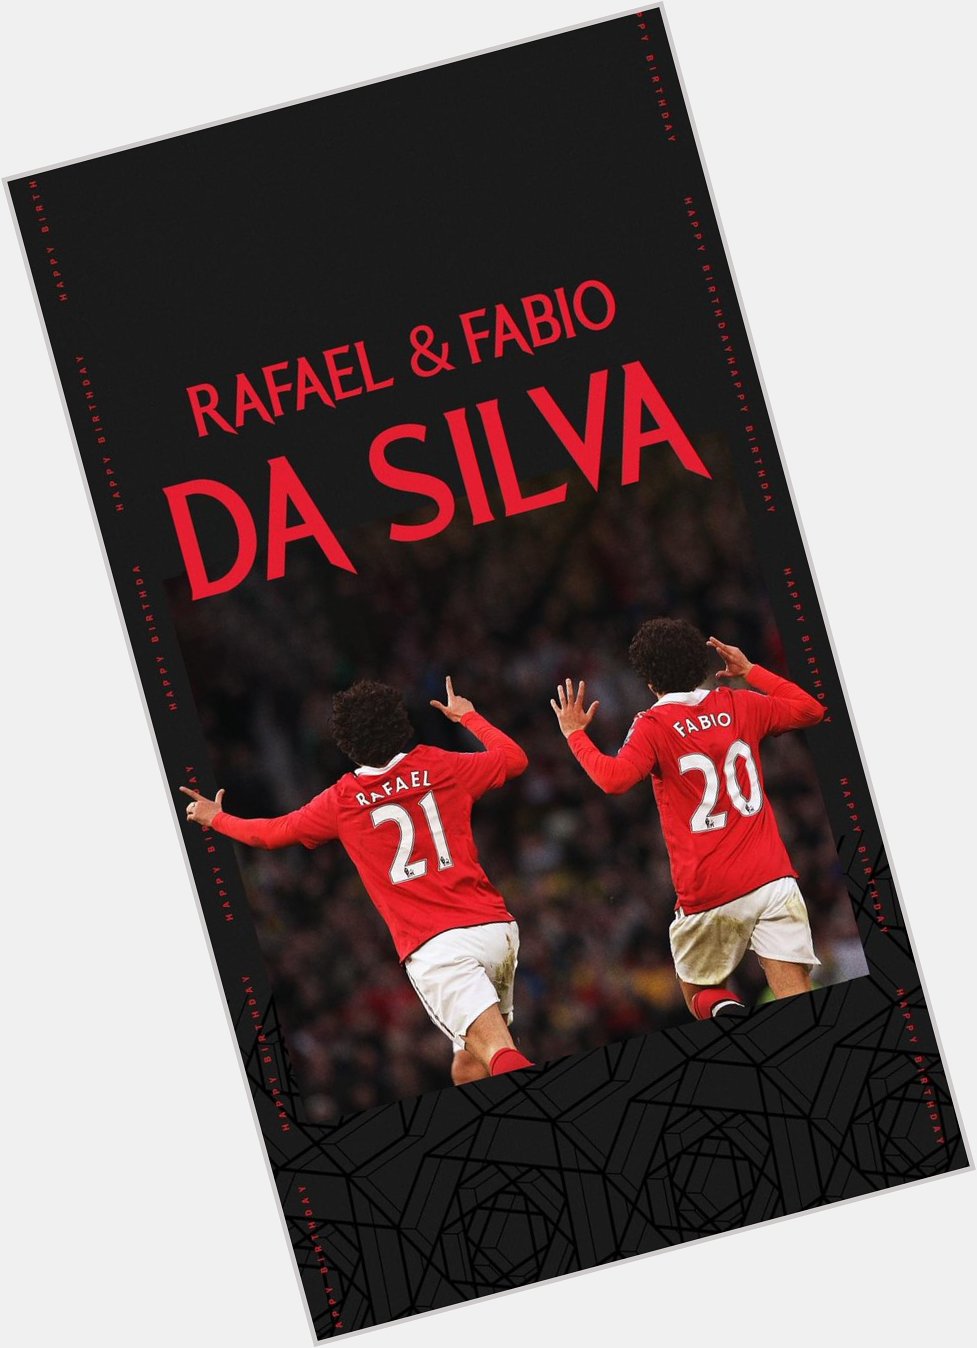 Wishing three former Reds a very happy birthday!   Rafael da Silva & Fabio Da Silva       Ashley Young 